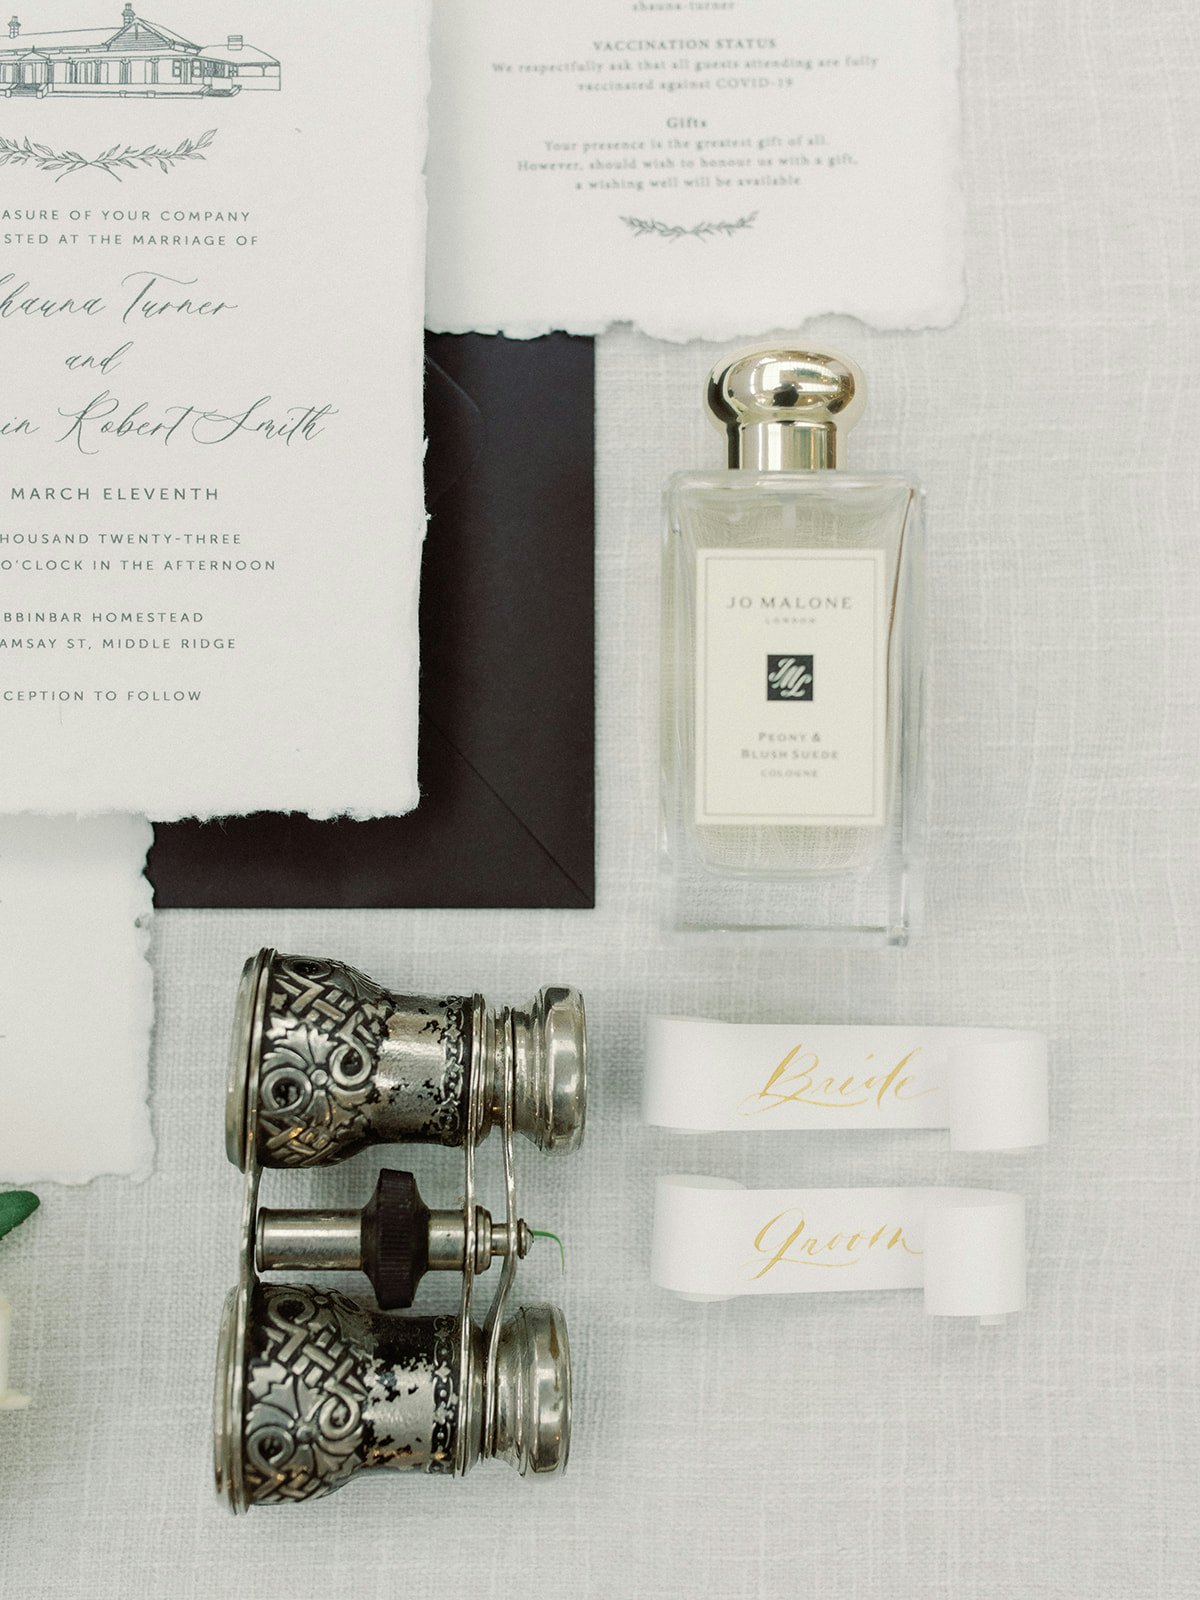 Perfume, binoculars and invitations